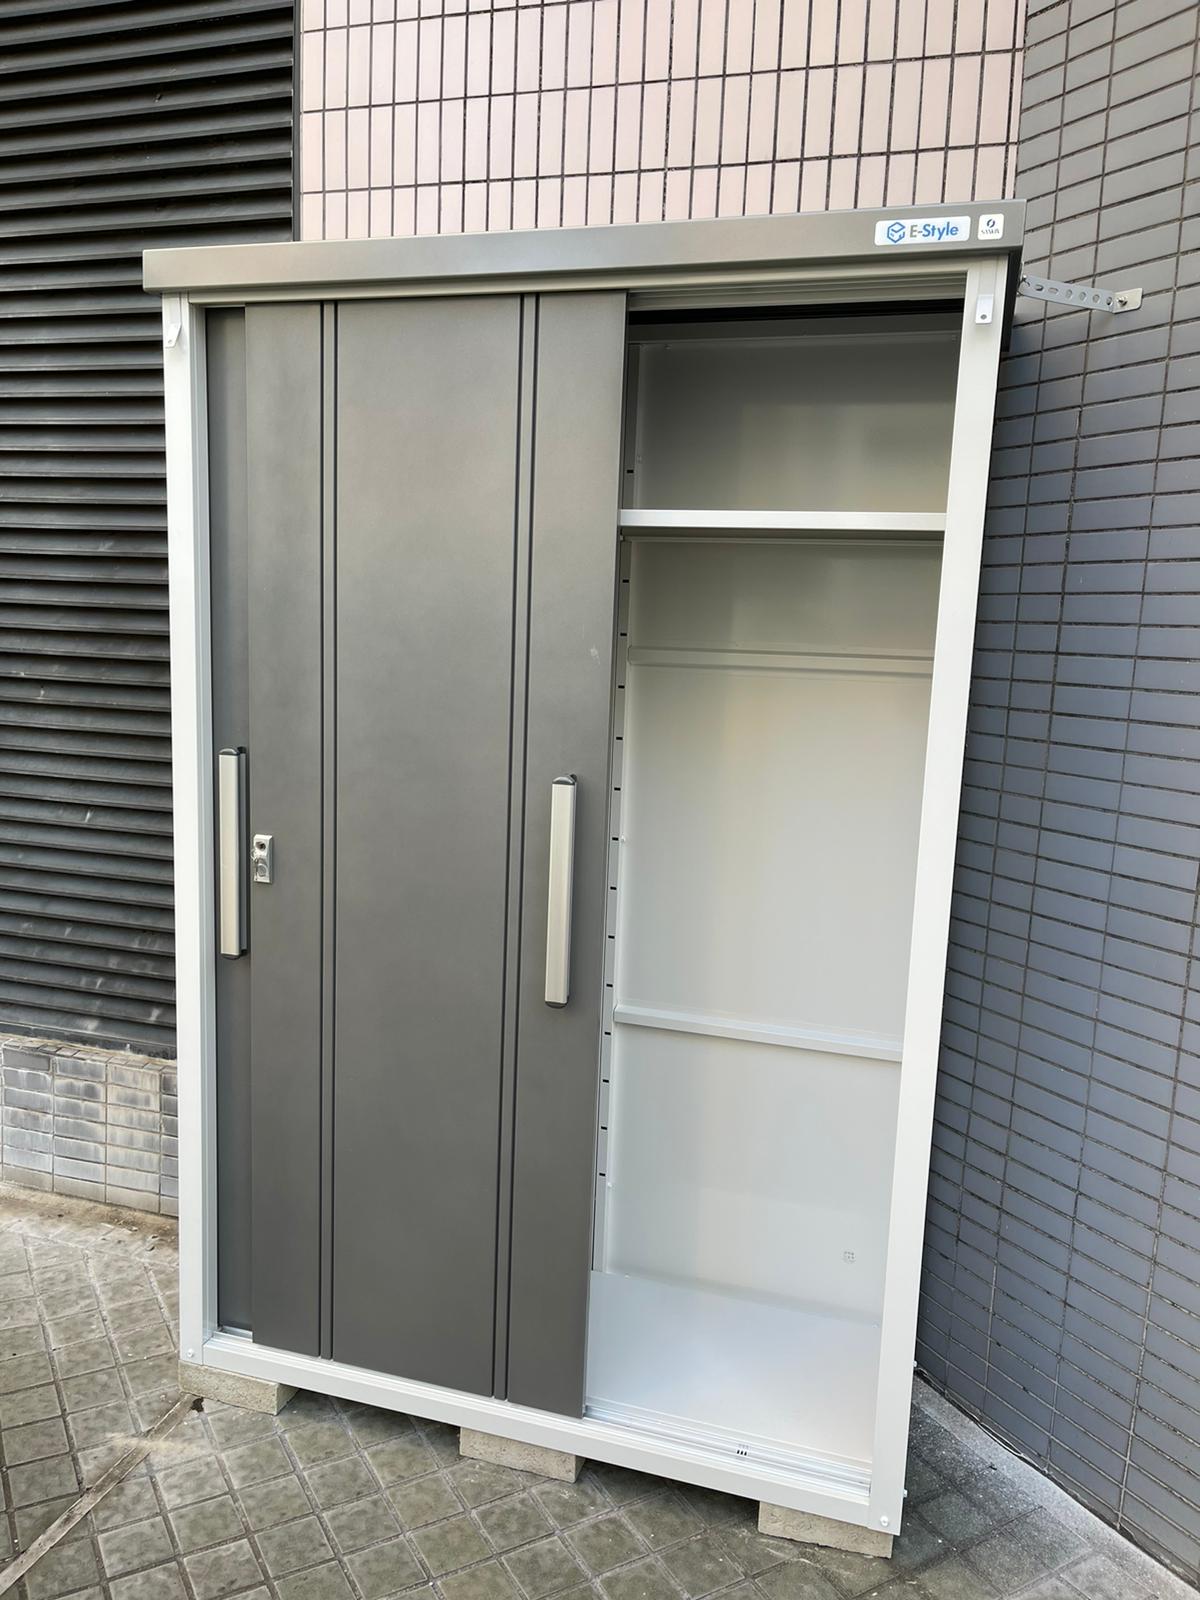 COOL-1350 SANKIN E-Style Outdoor Storage 戶外日本存物櫃$6,200 – Longhome